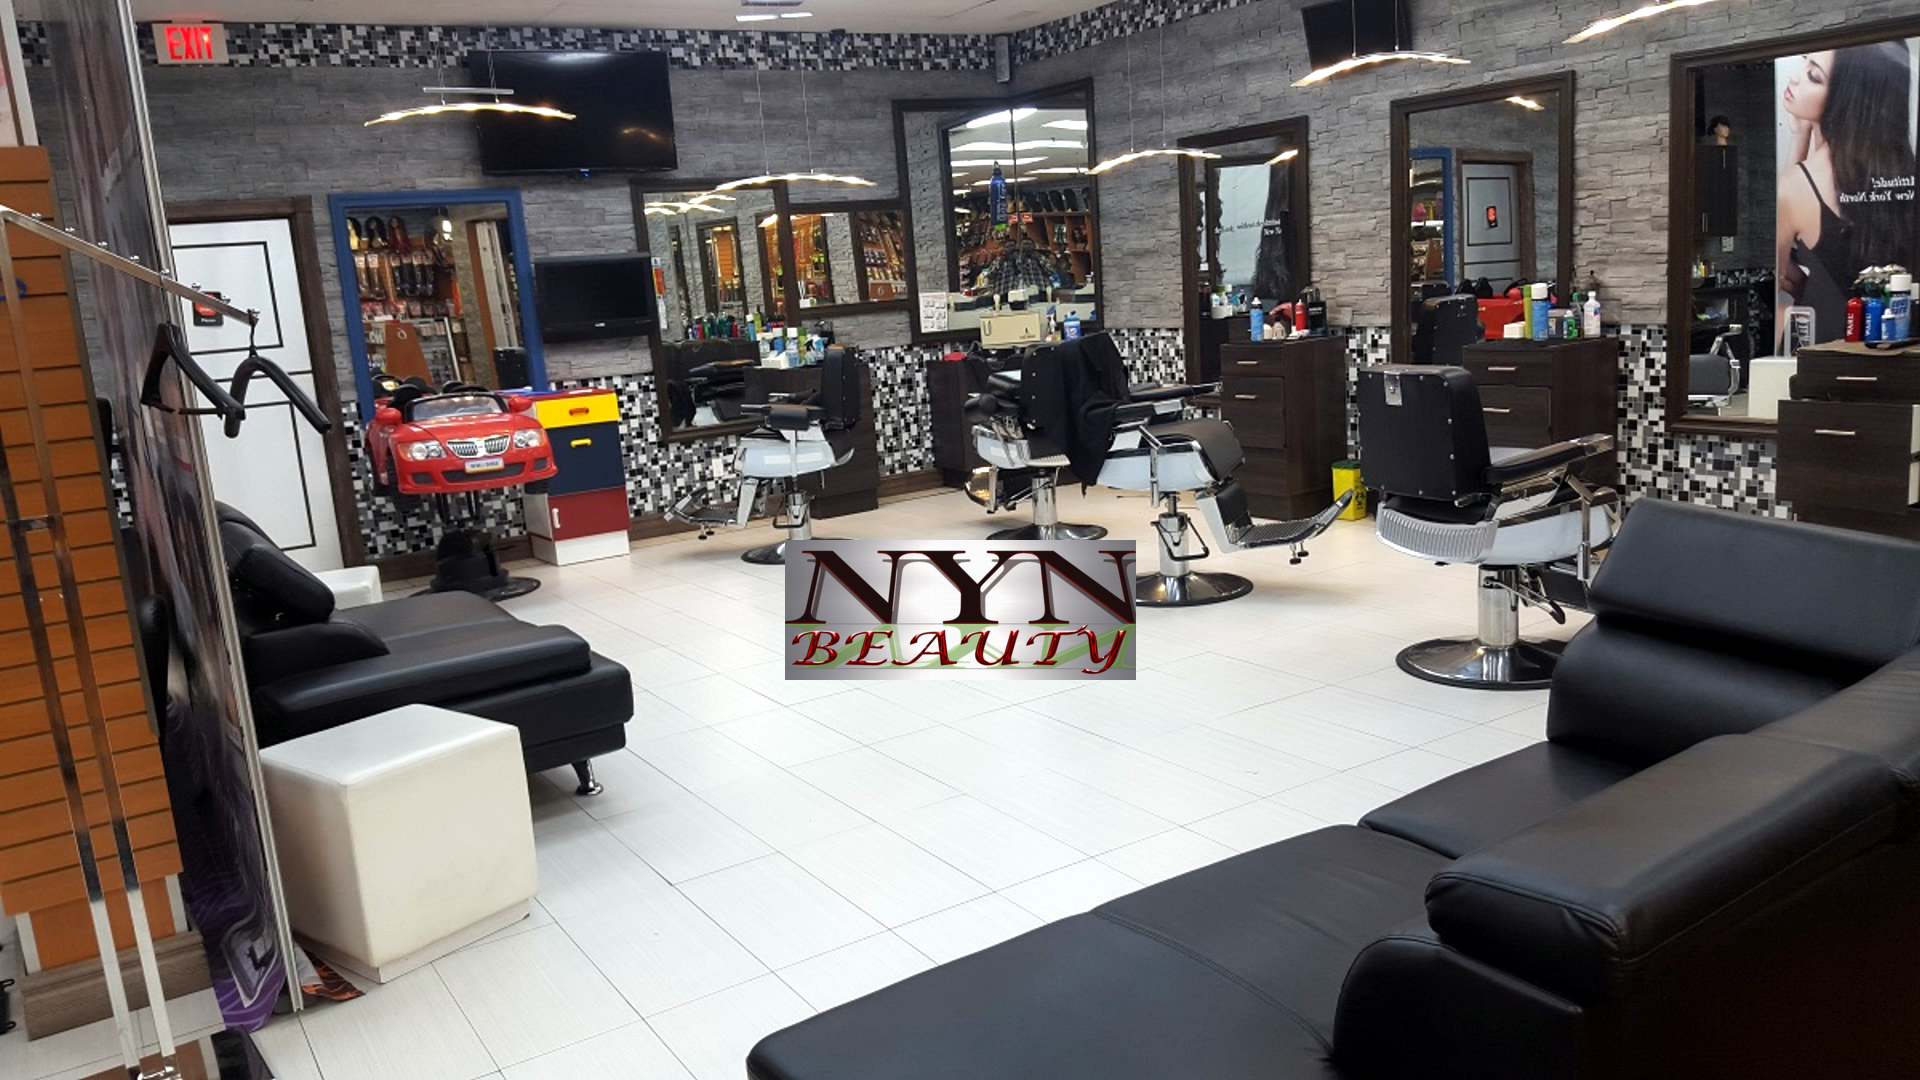 NYN Beauty – Ethnic Hair Salon & Barbershop